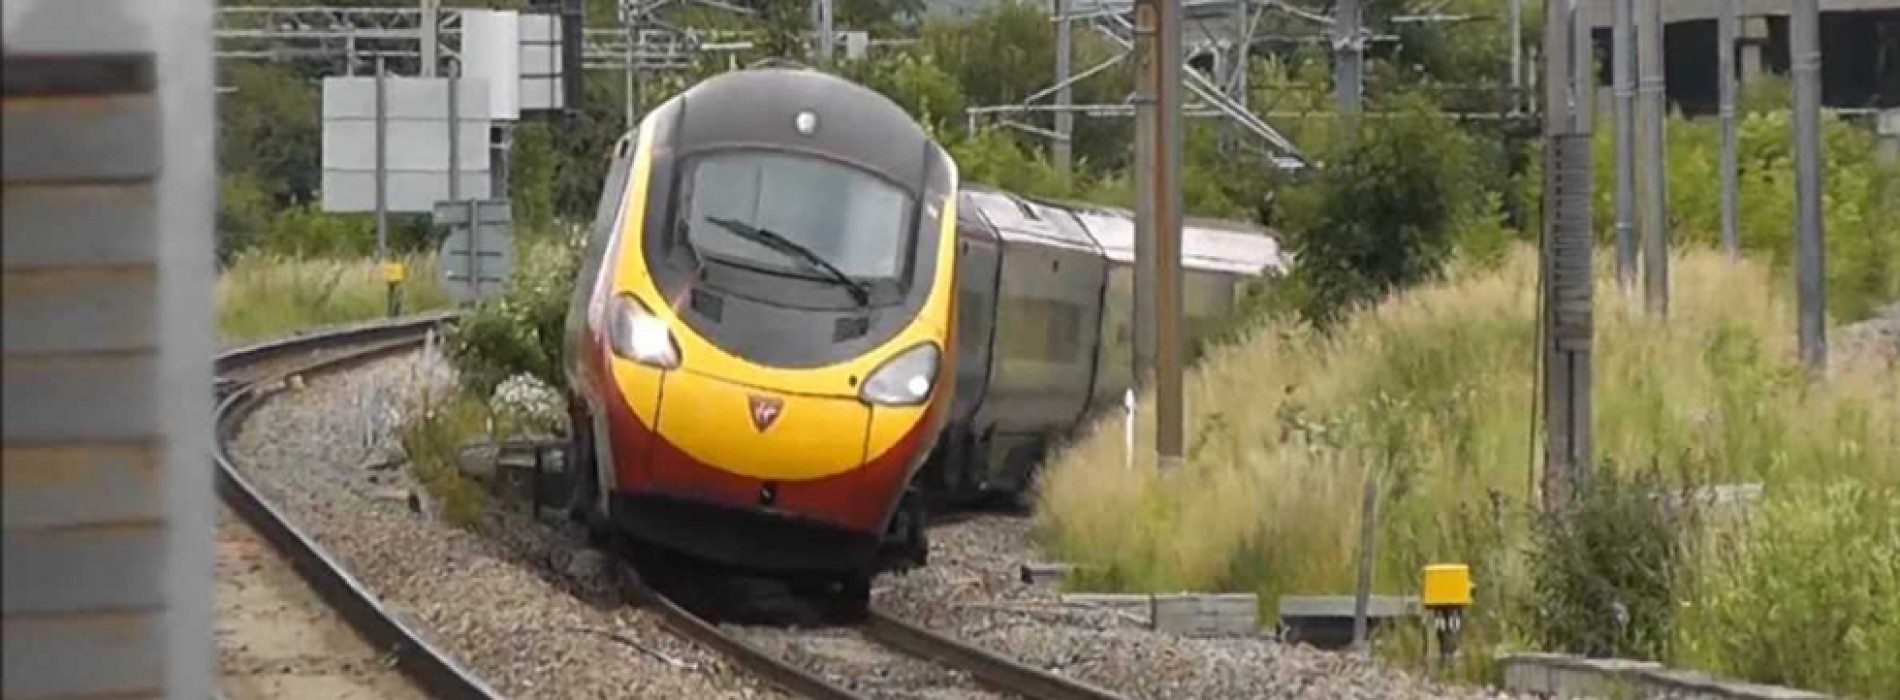 UK rail passengers see prices increase as new year begins